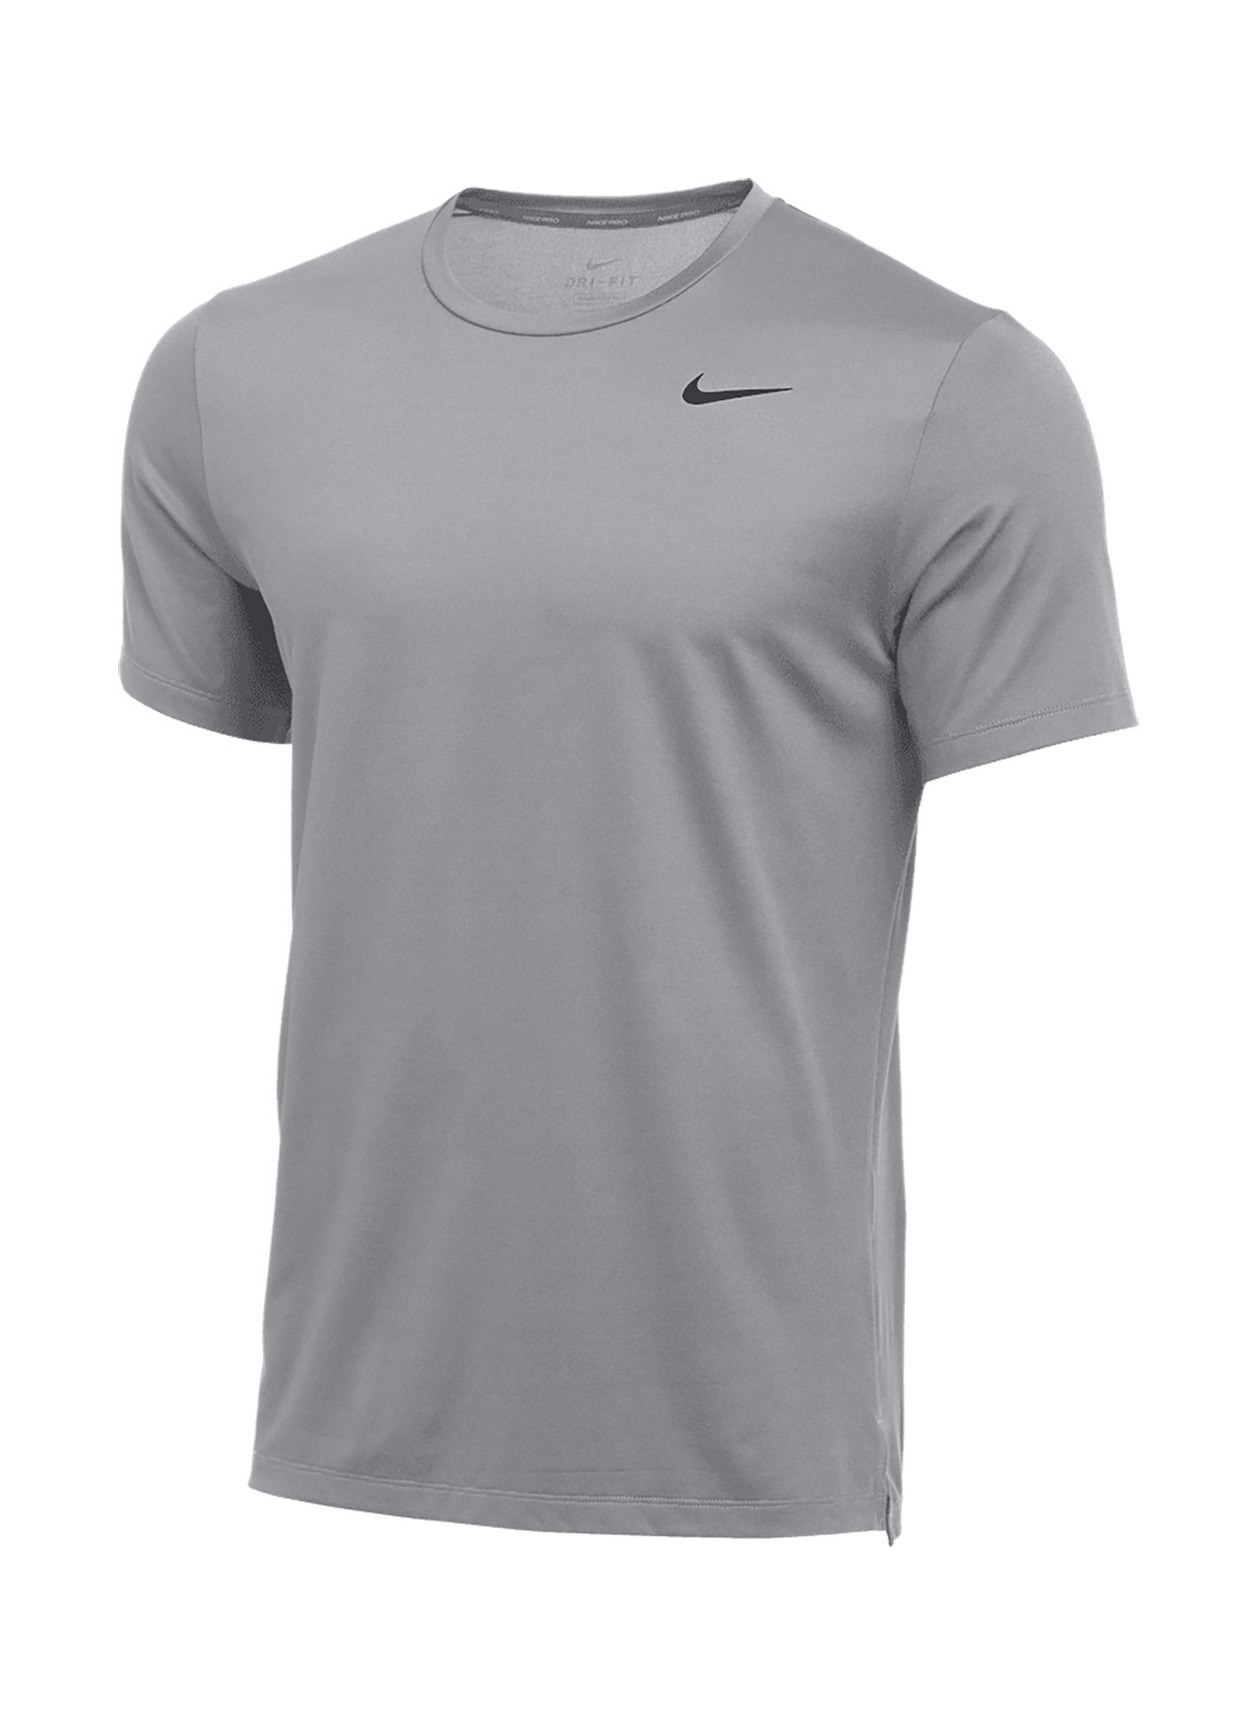 Nike Men's Wolf Grey / Heather Dri-FIT Training T-Shirt